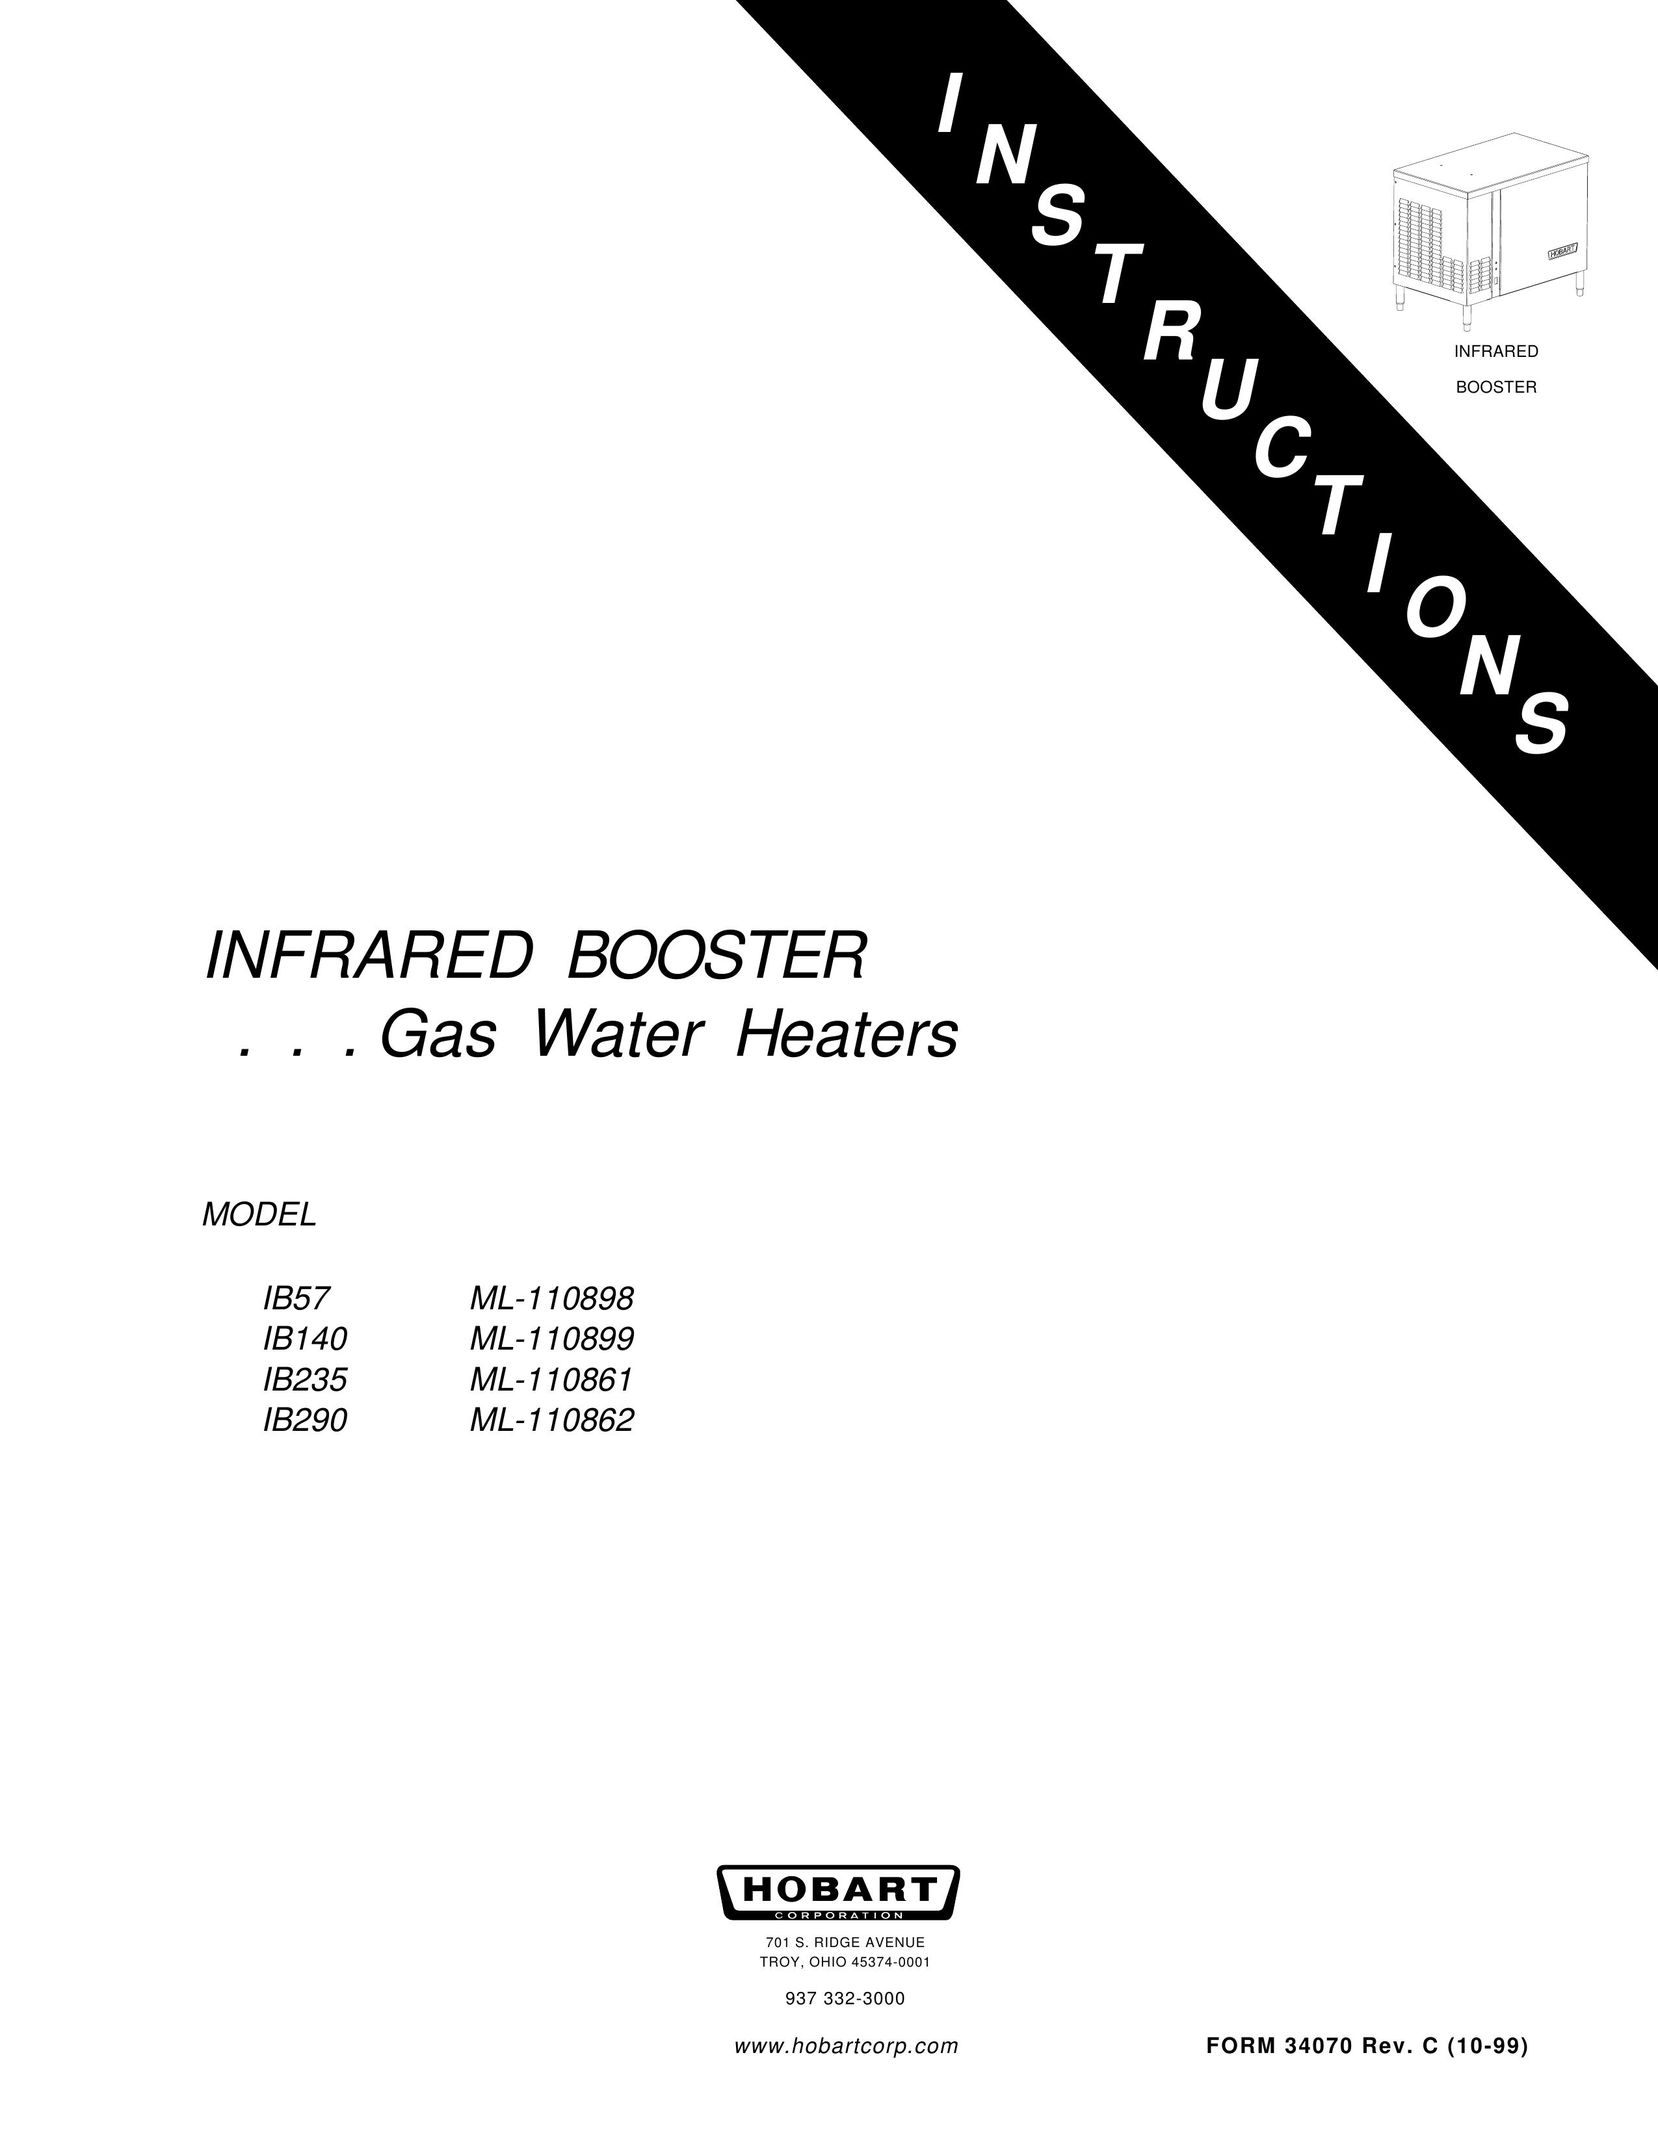 Hobart IB290 ML-110862 Water Heater User Manual